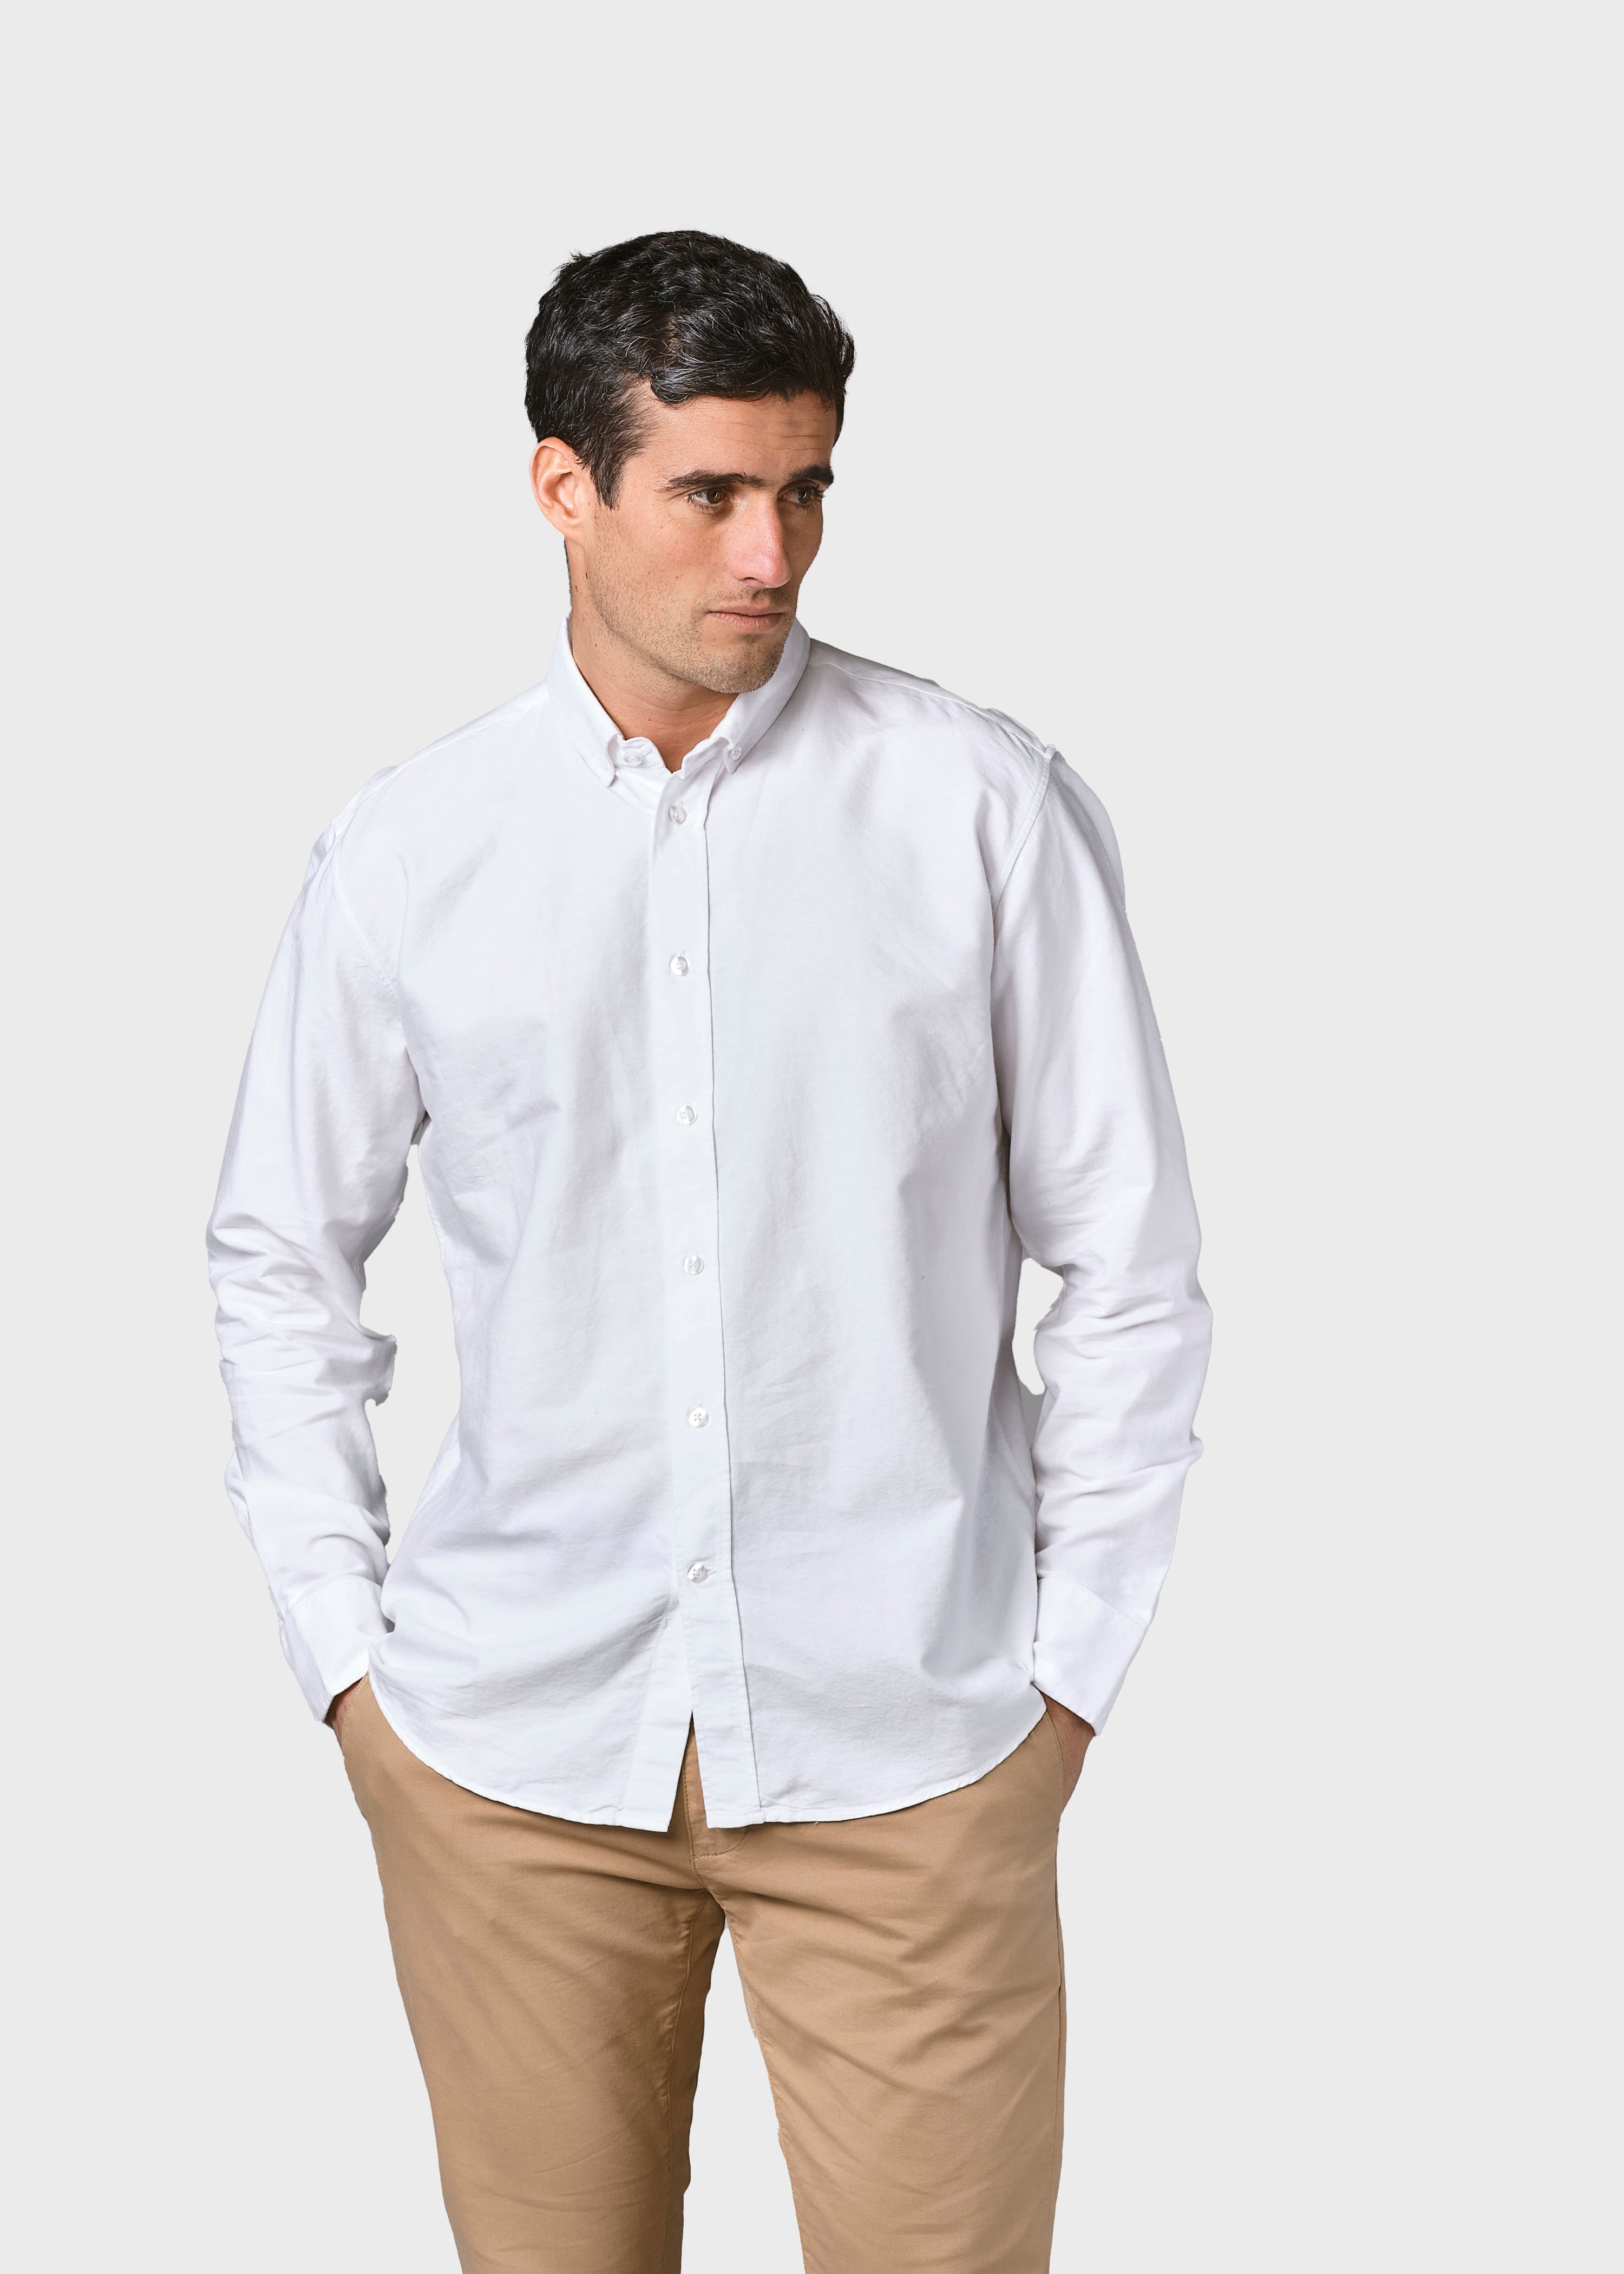 Organic cotton White Shirt for Men